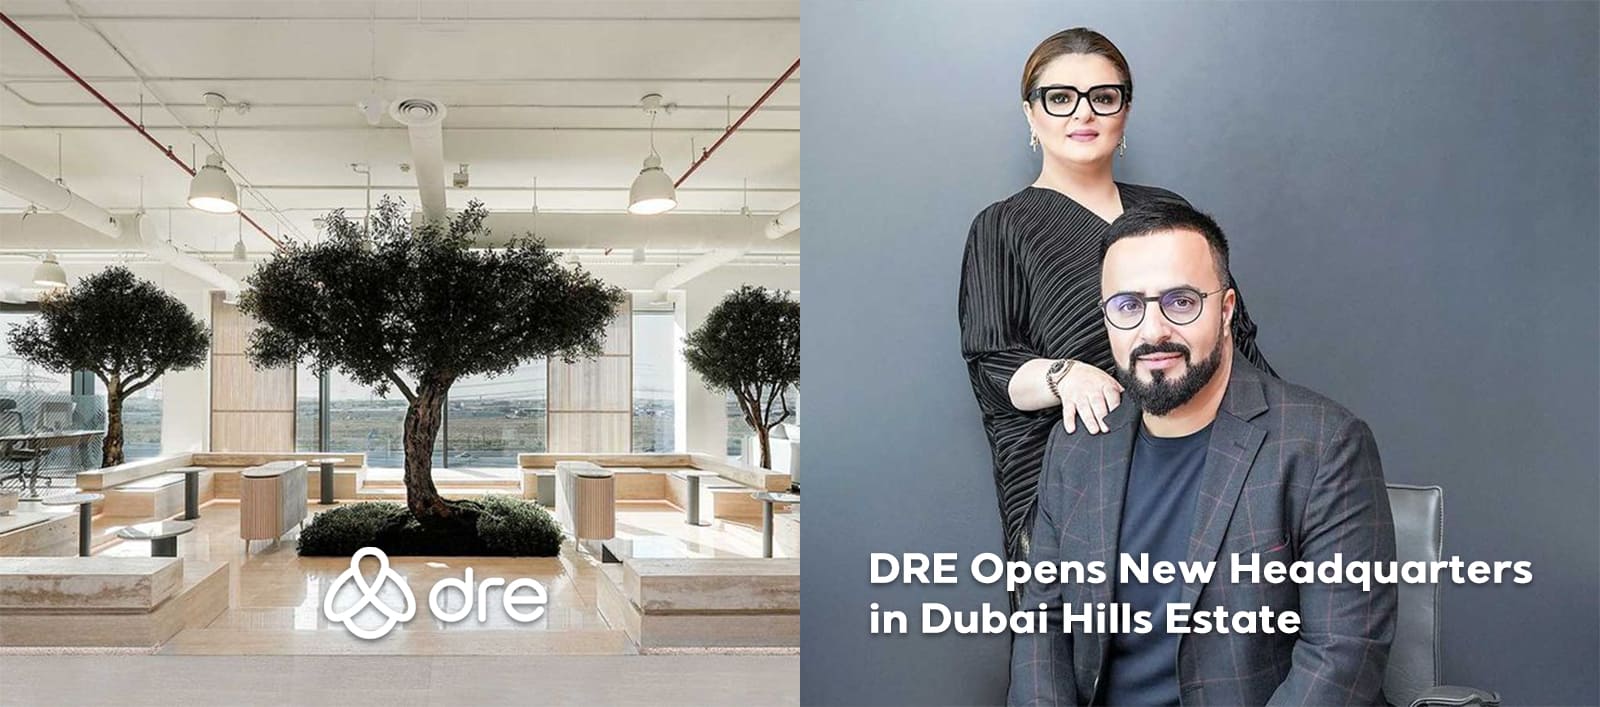 DRE Opens New Headquarters in Dubai Hills Estate